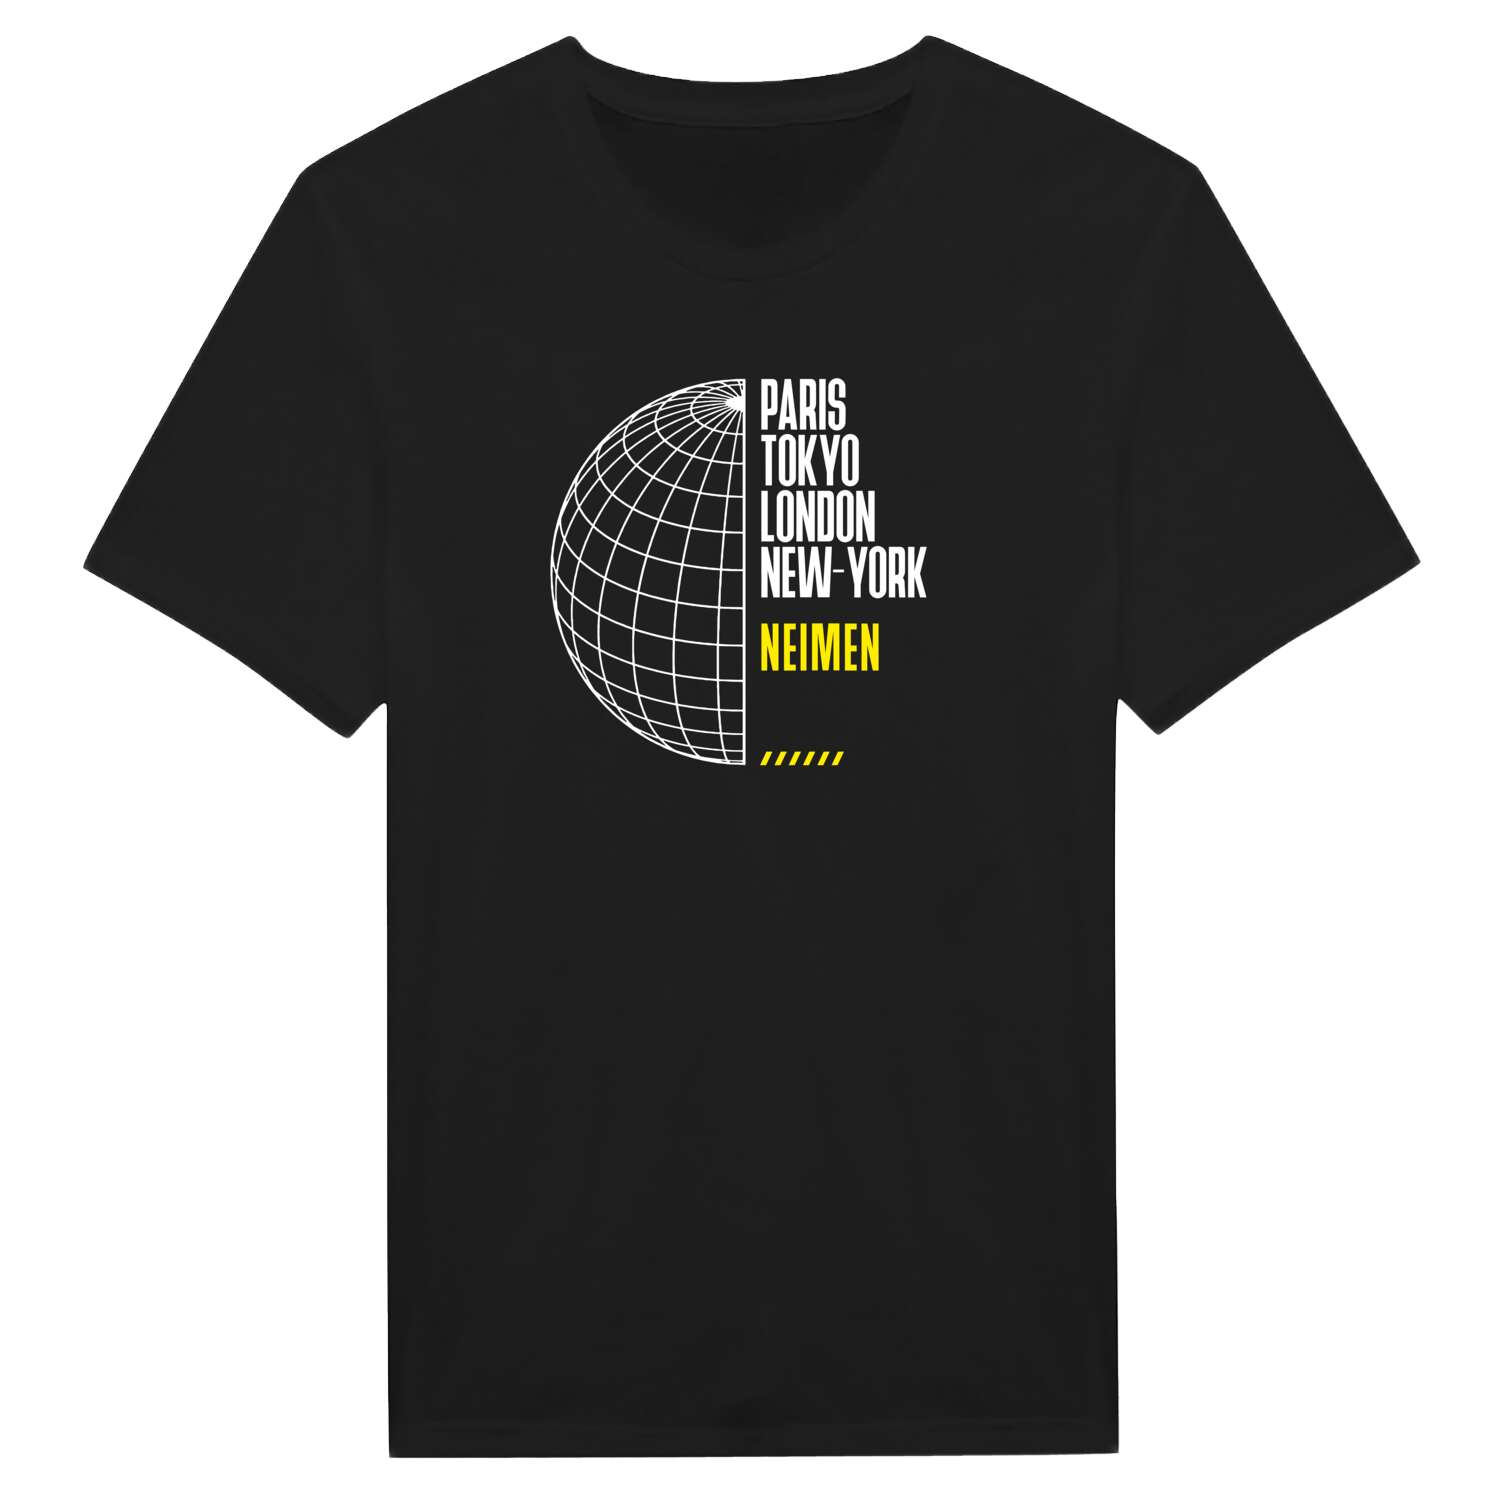 Neimen T-Shirt »Paris Tokyo London«